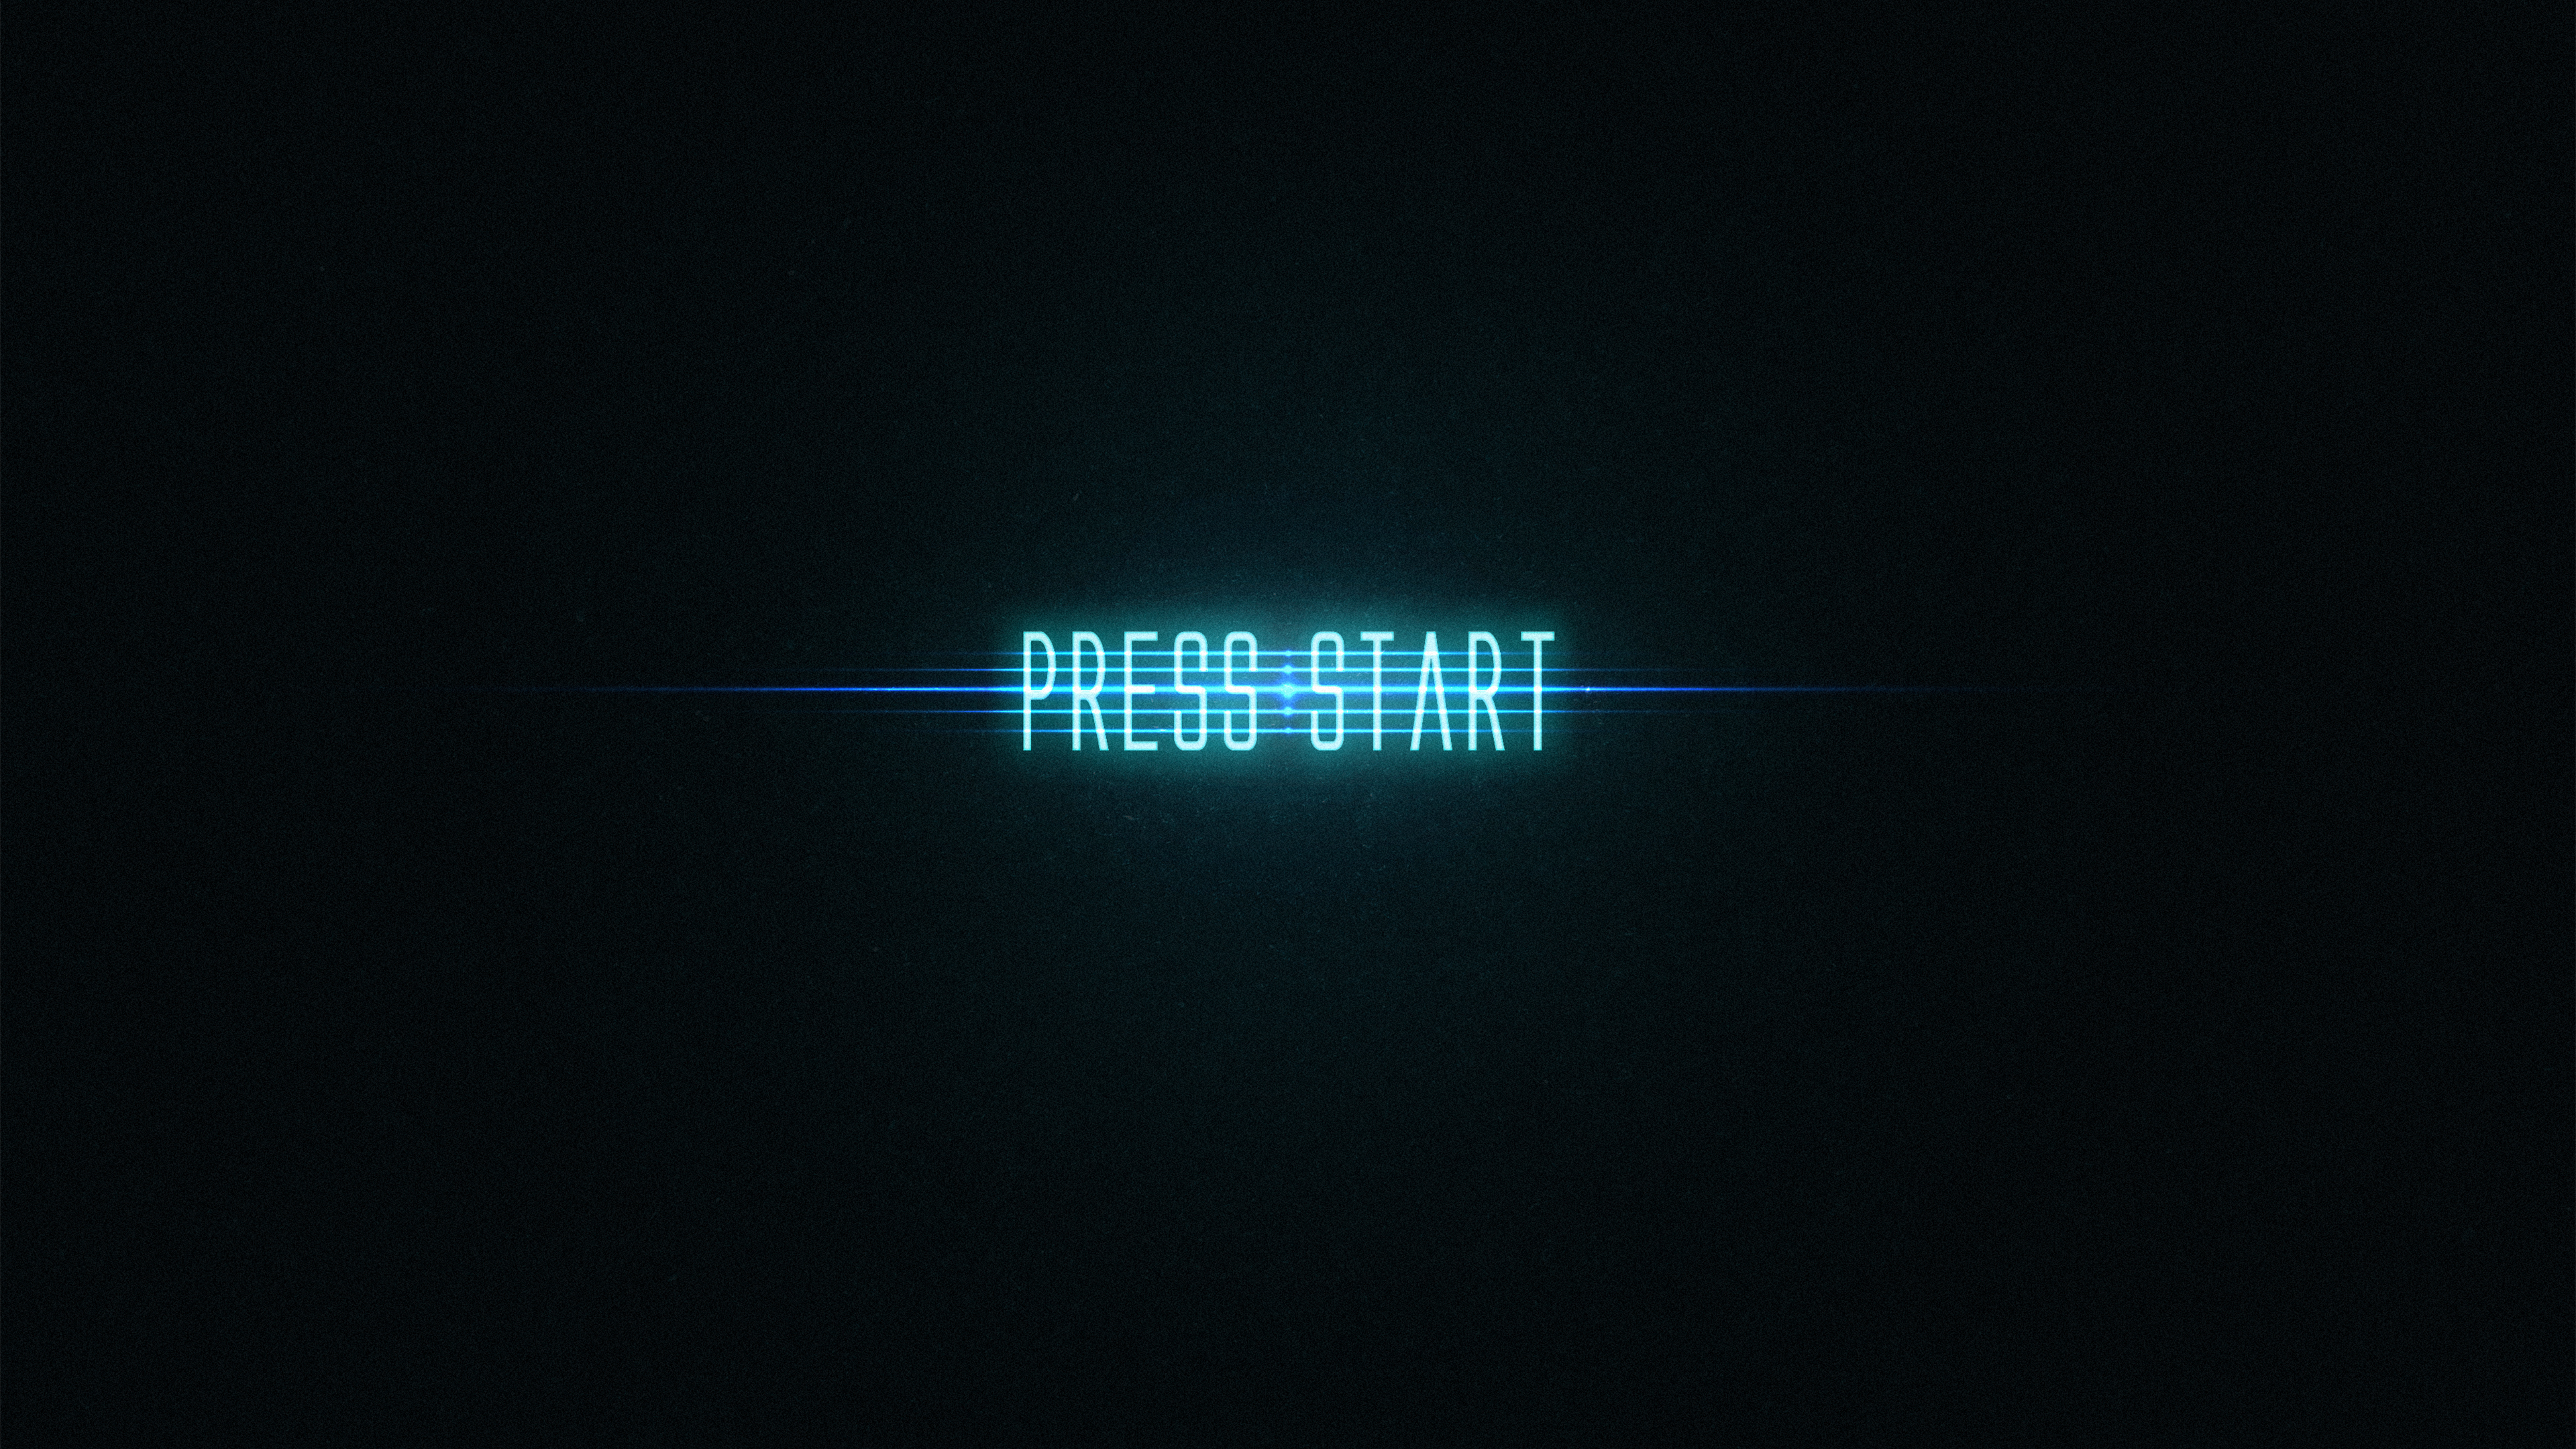 PRESS START Neon K